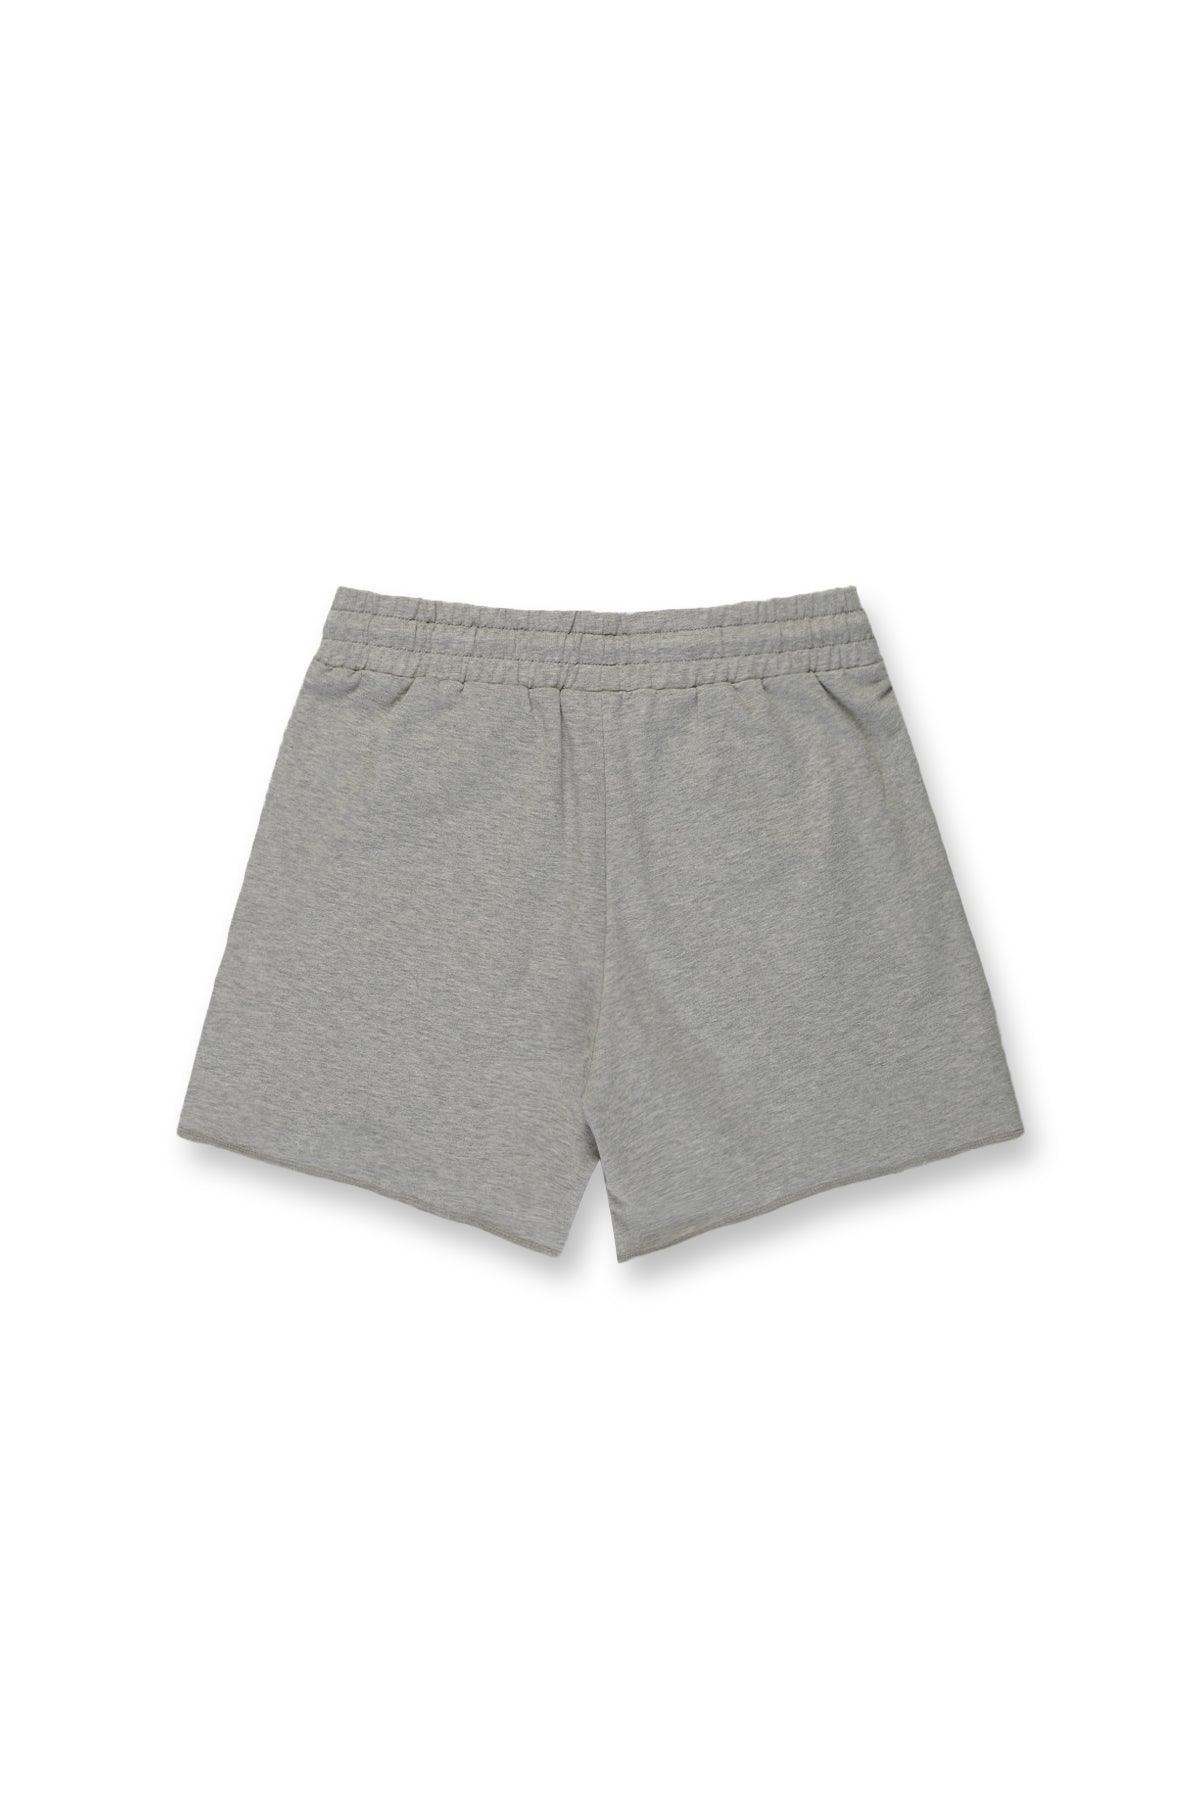 Motion 5'' Varsity Sweat Shorts - Light Gray - Jed North